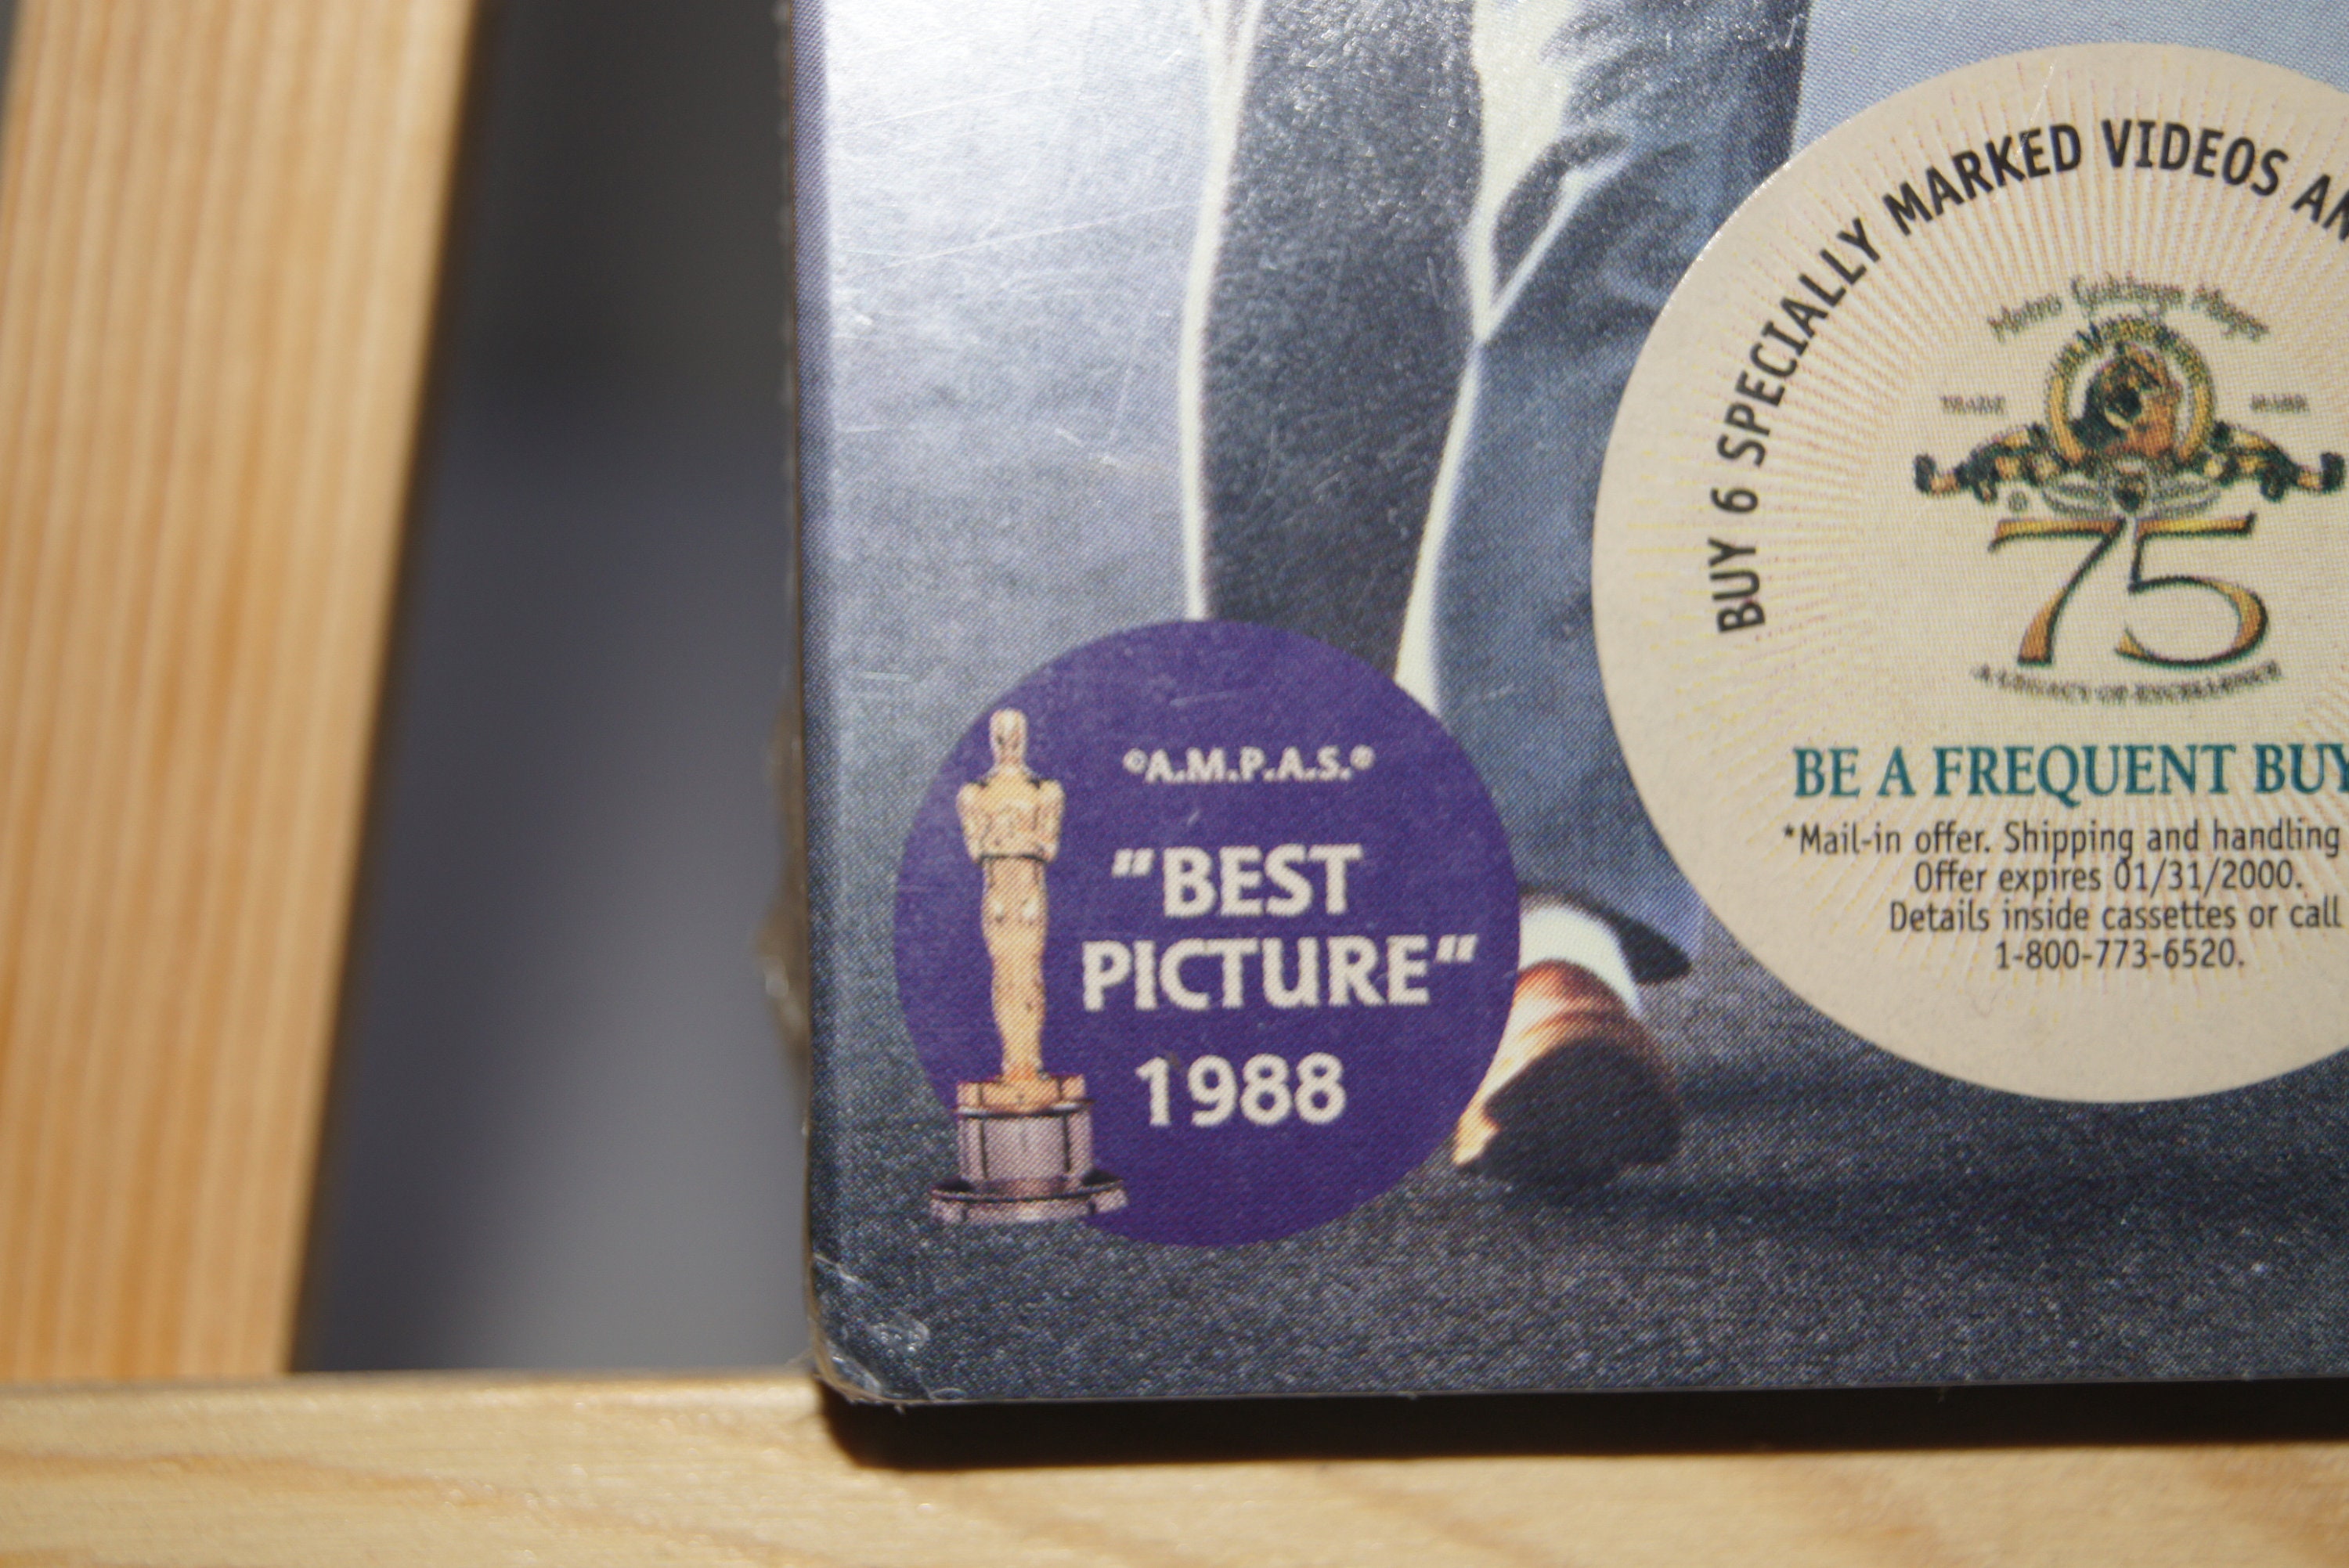 Rain Man VHS Tape Movie Full Screen Edition Tom Cruise Dustin Hoffman Oscar  27616164834